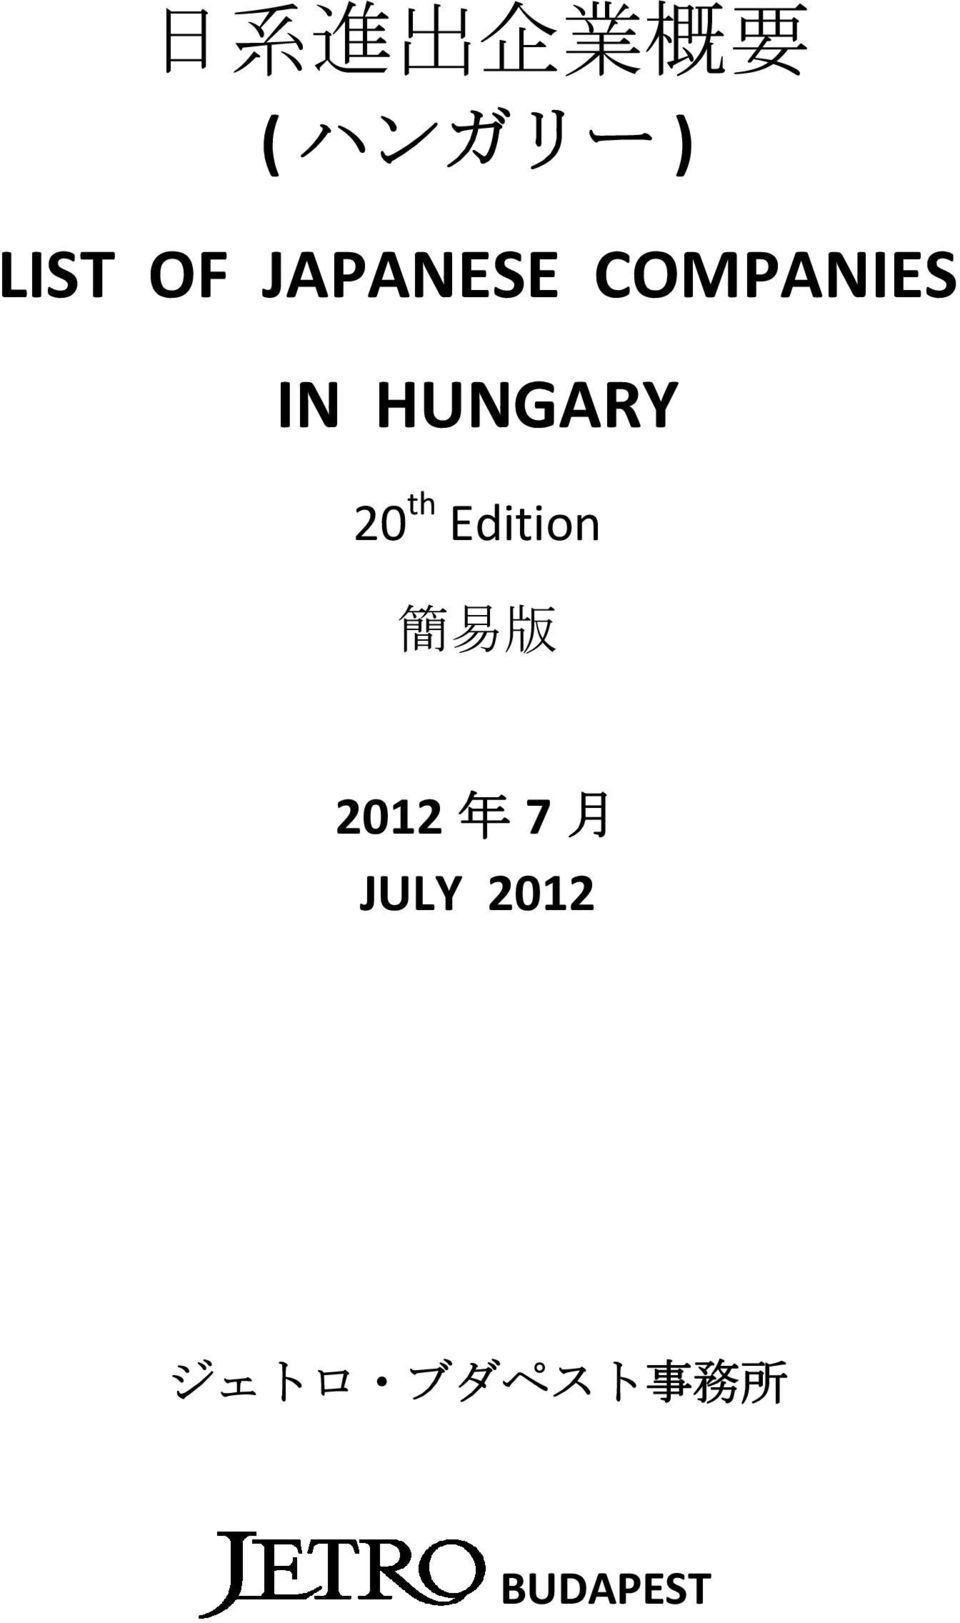 20 th Edition 簡 易 版 2012 年 7 月